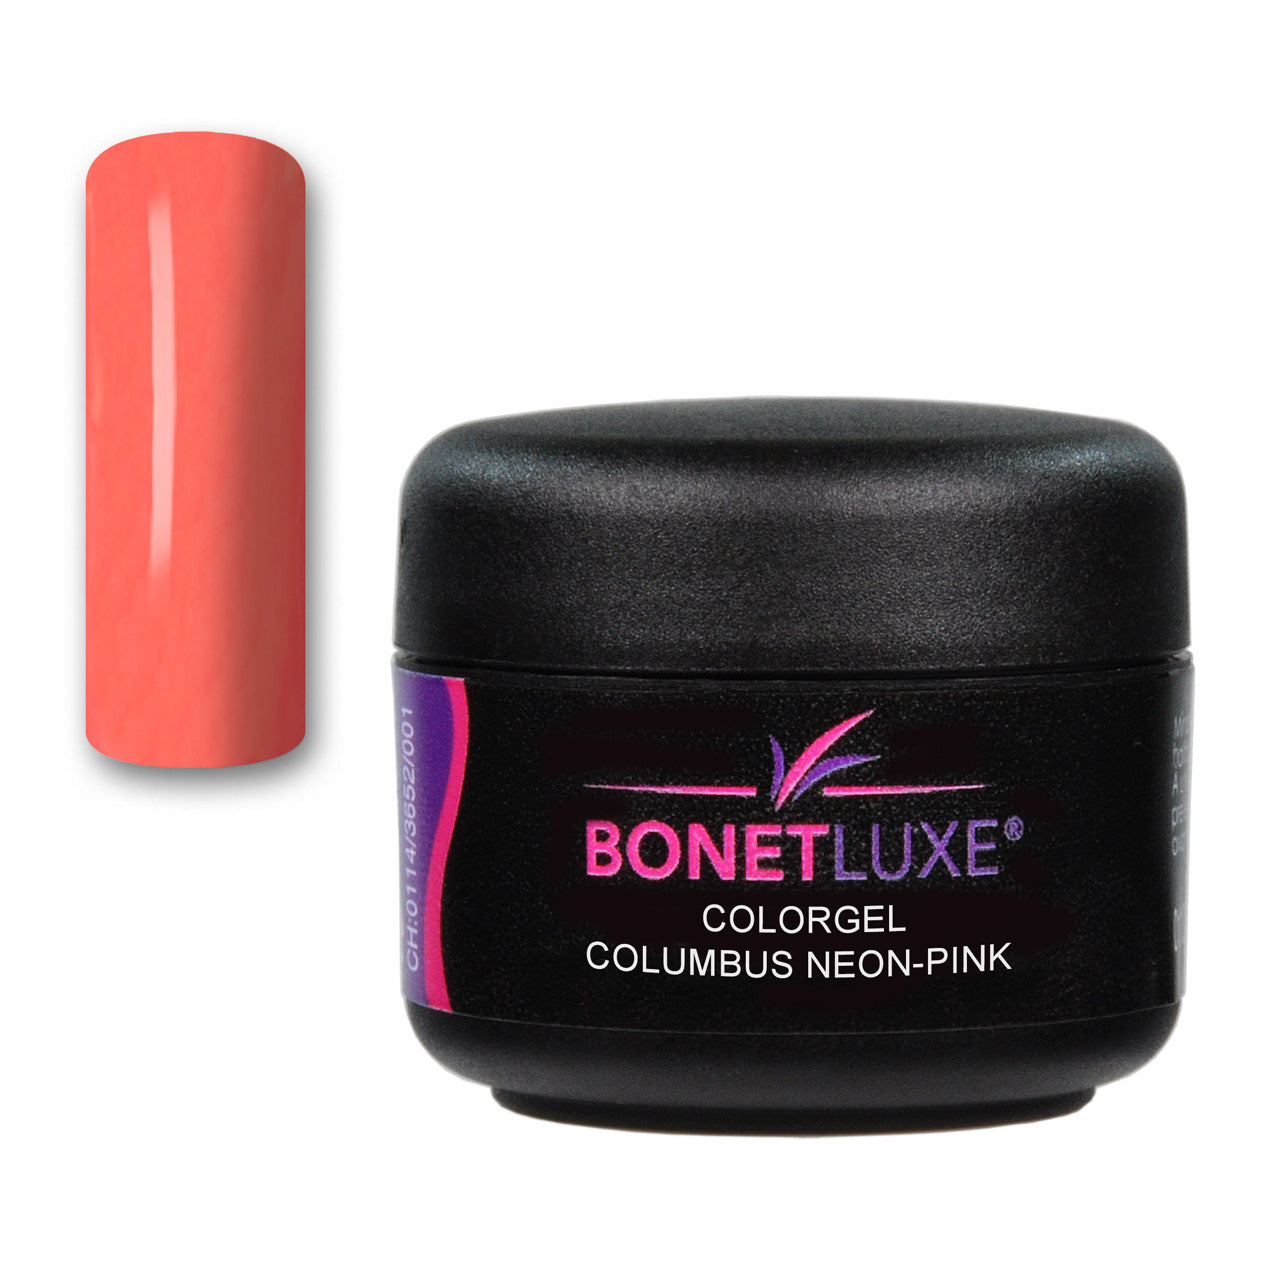 Bonetluxe Colorgel Columbus Neon Pink